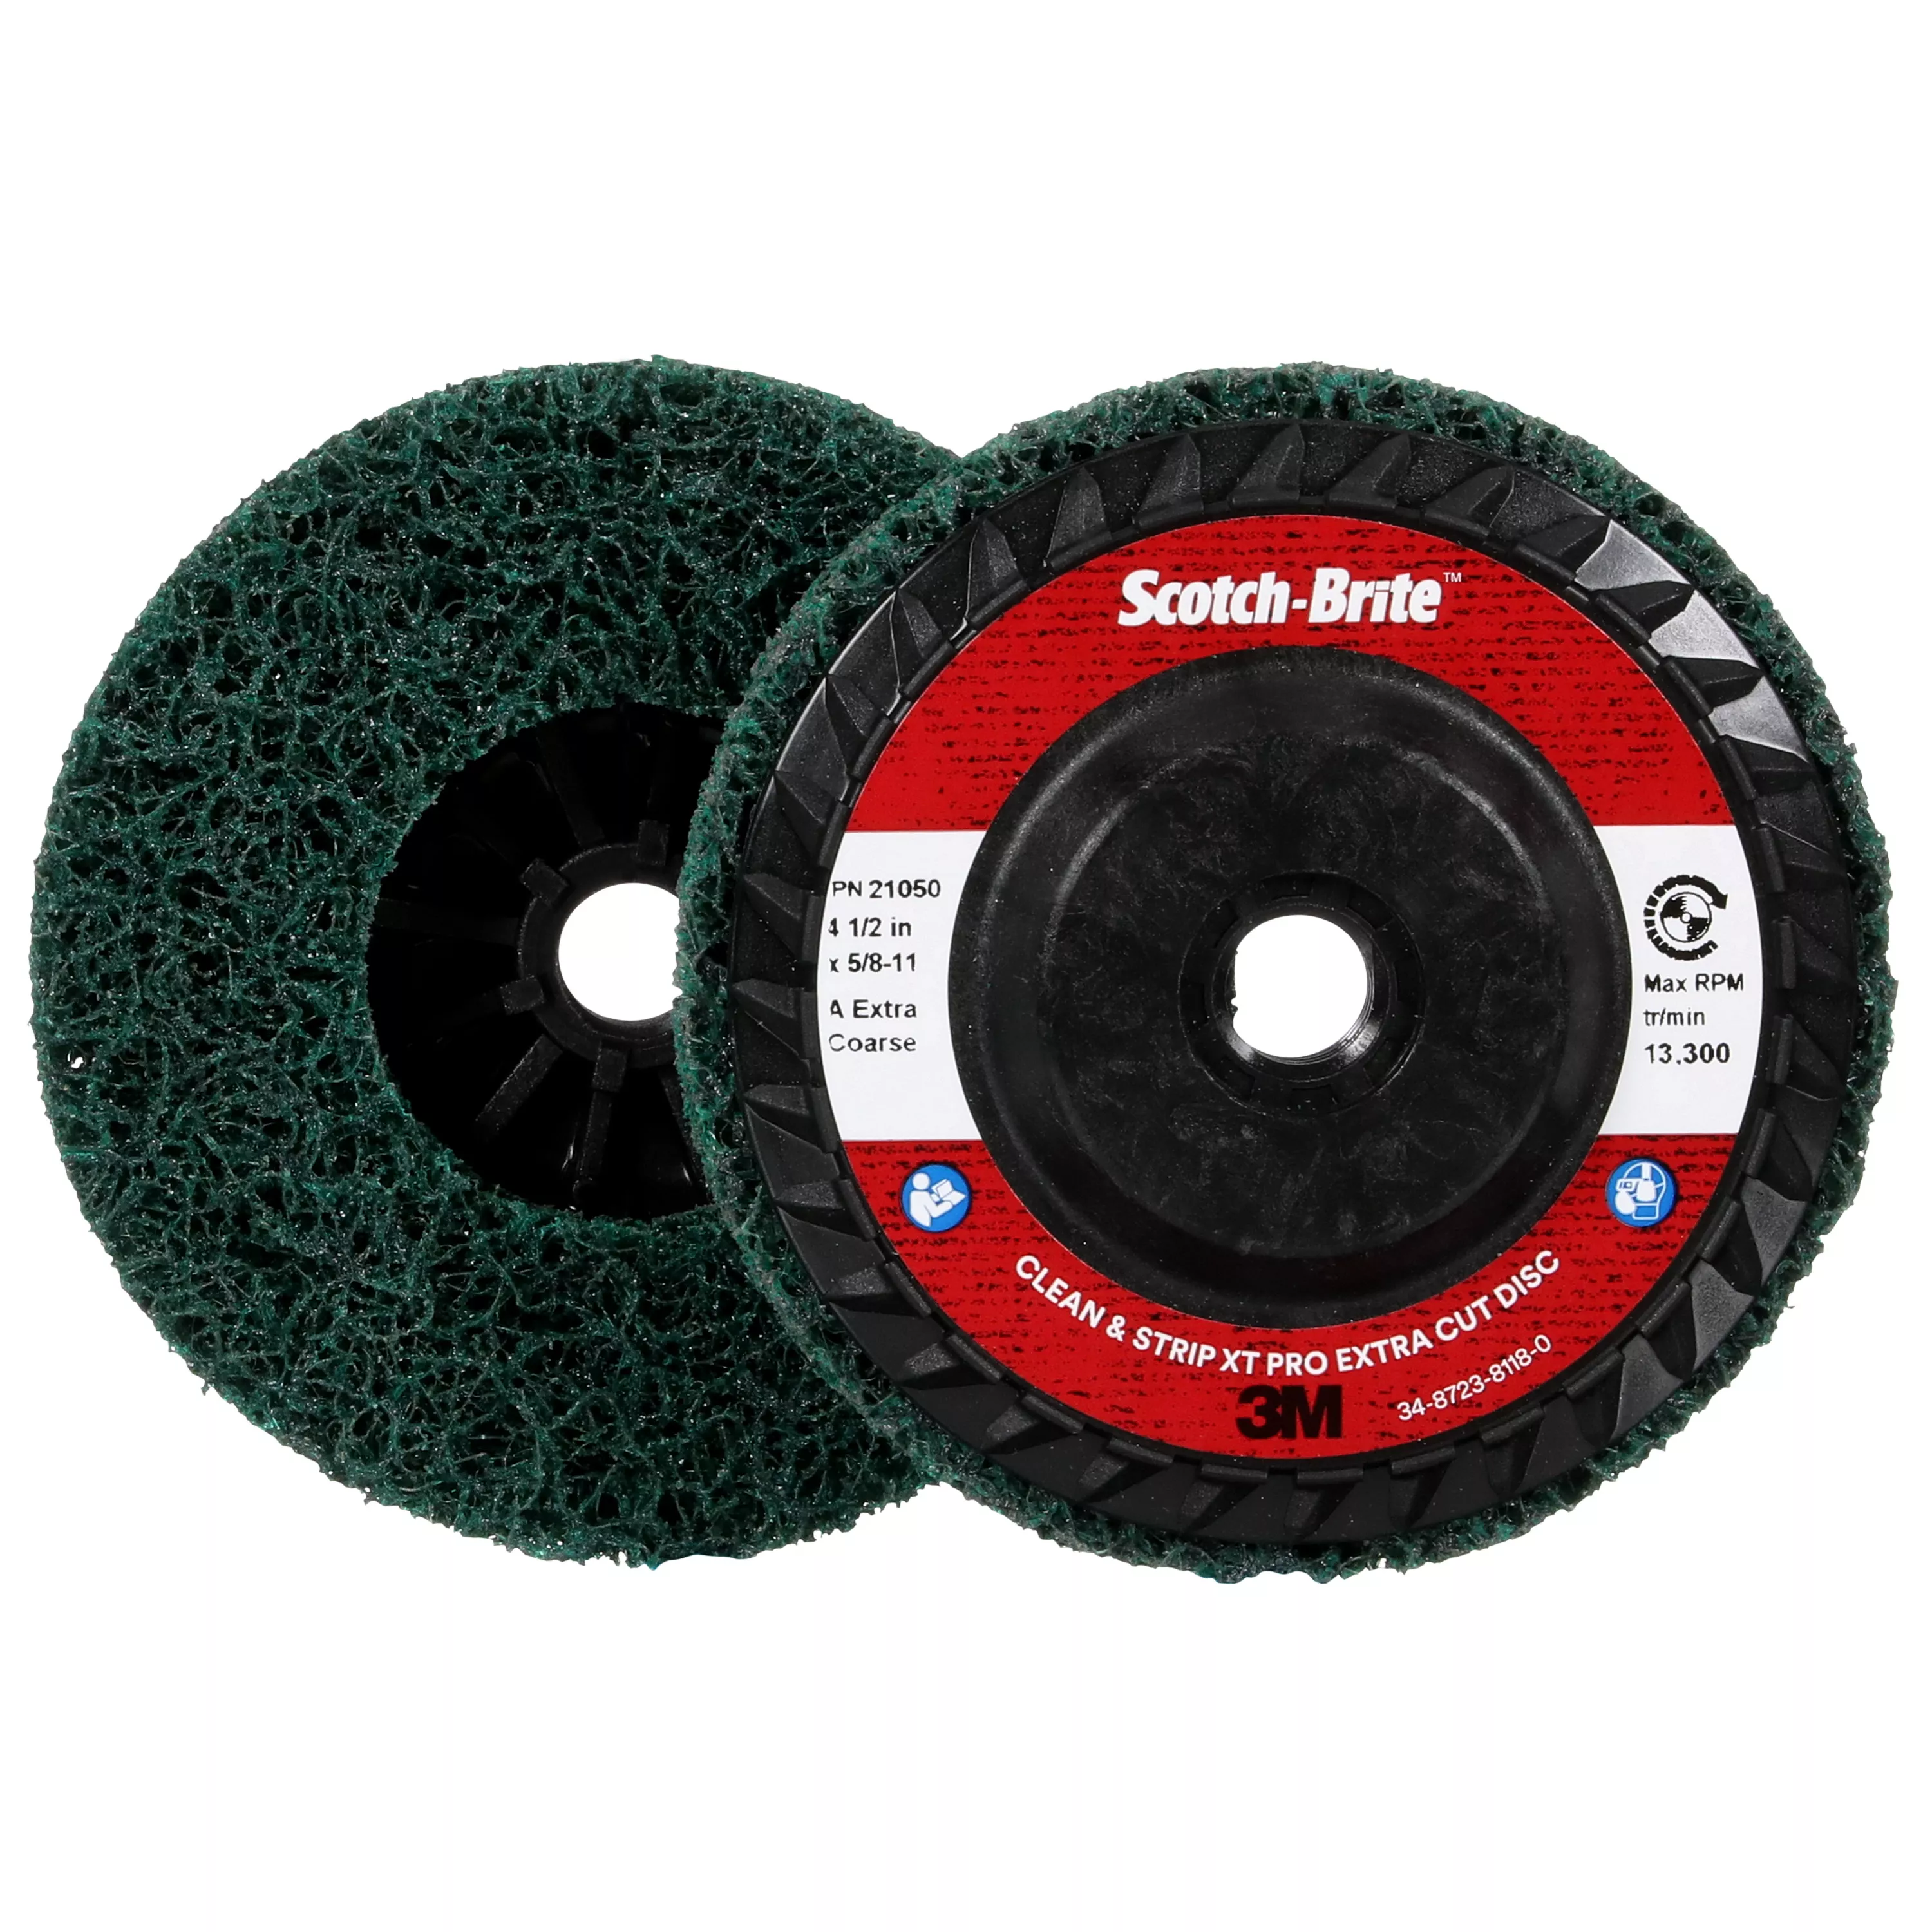 Scotch-Brite™ Clean and Strip XT Pro Extra Cut Disc, XC-DC, A/O Extra
Coarse, Green, 4-1/2 in x 5/8 in-11, Type 27, 10 ea/Case